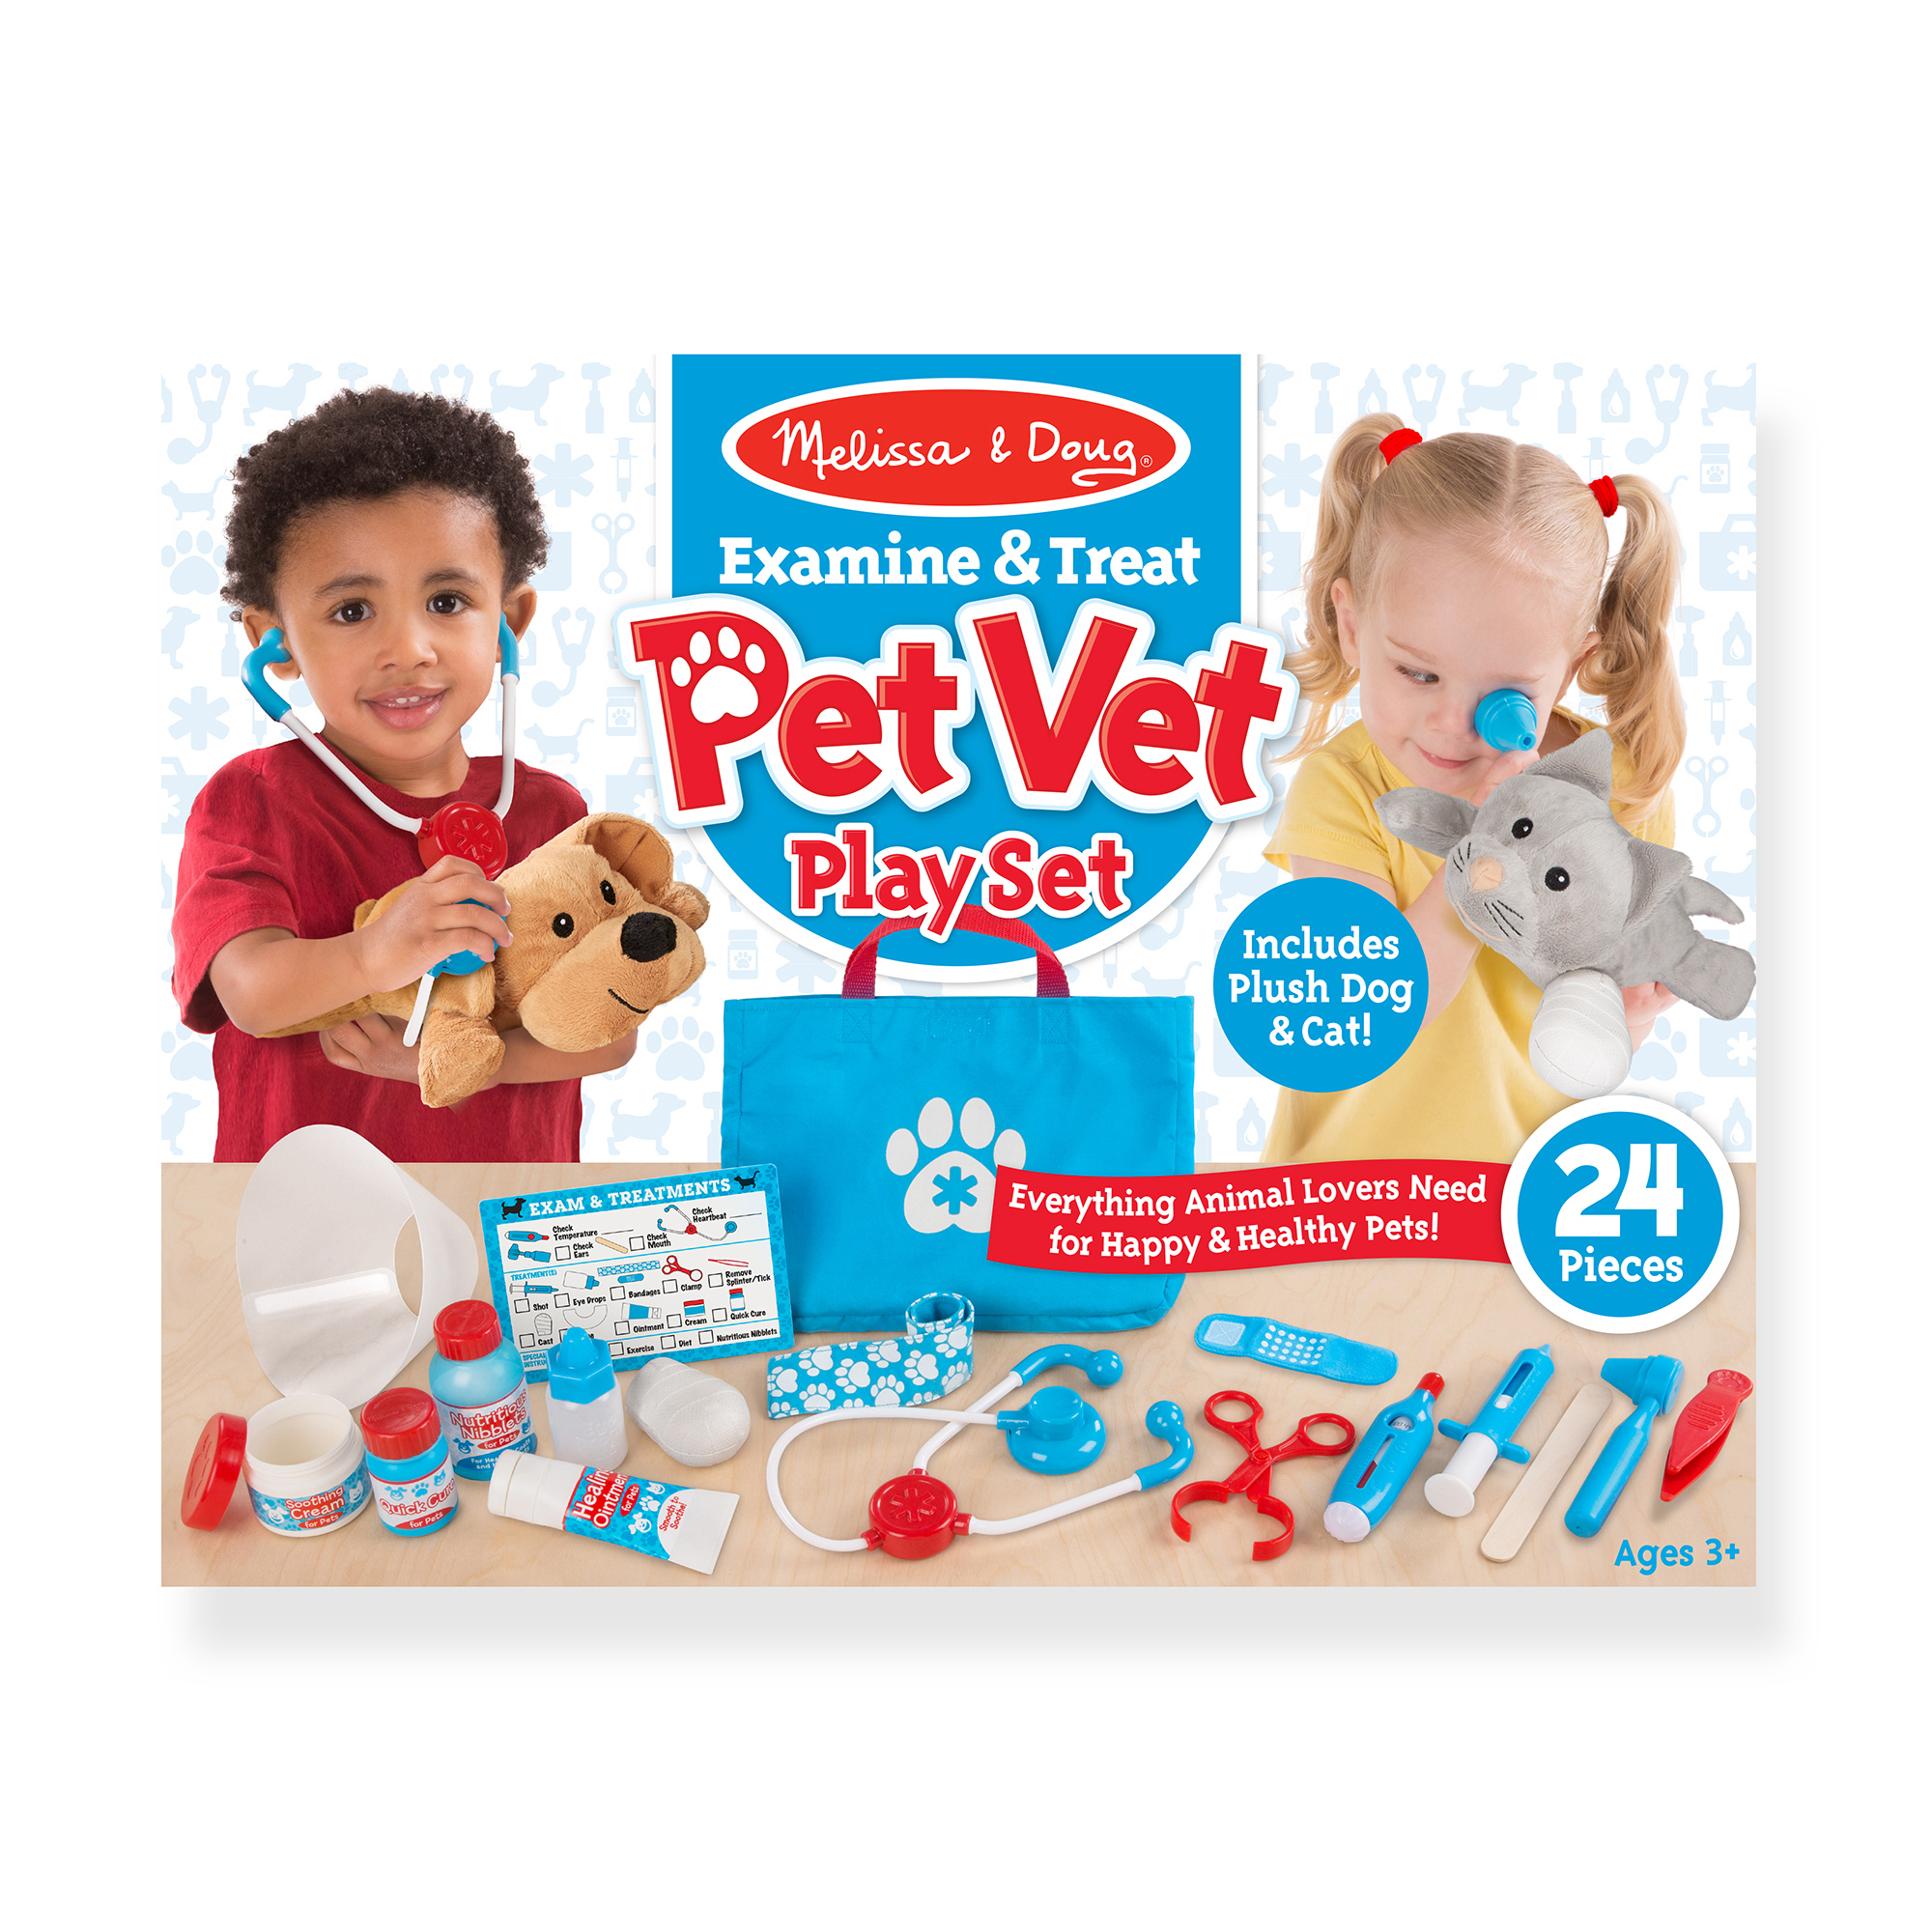 Examine & Treat Pet Vet Play Set, Animal & People Play Sets, Helps Children Develop Empathy, 24 Pieces, 10.5" H X 13.5"